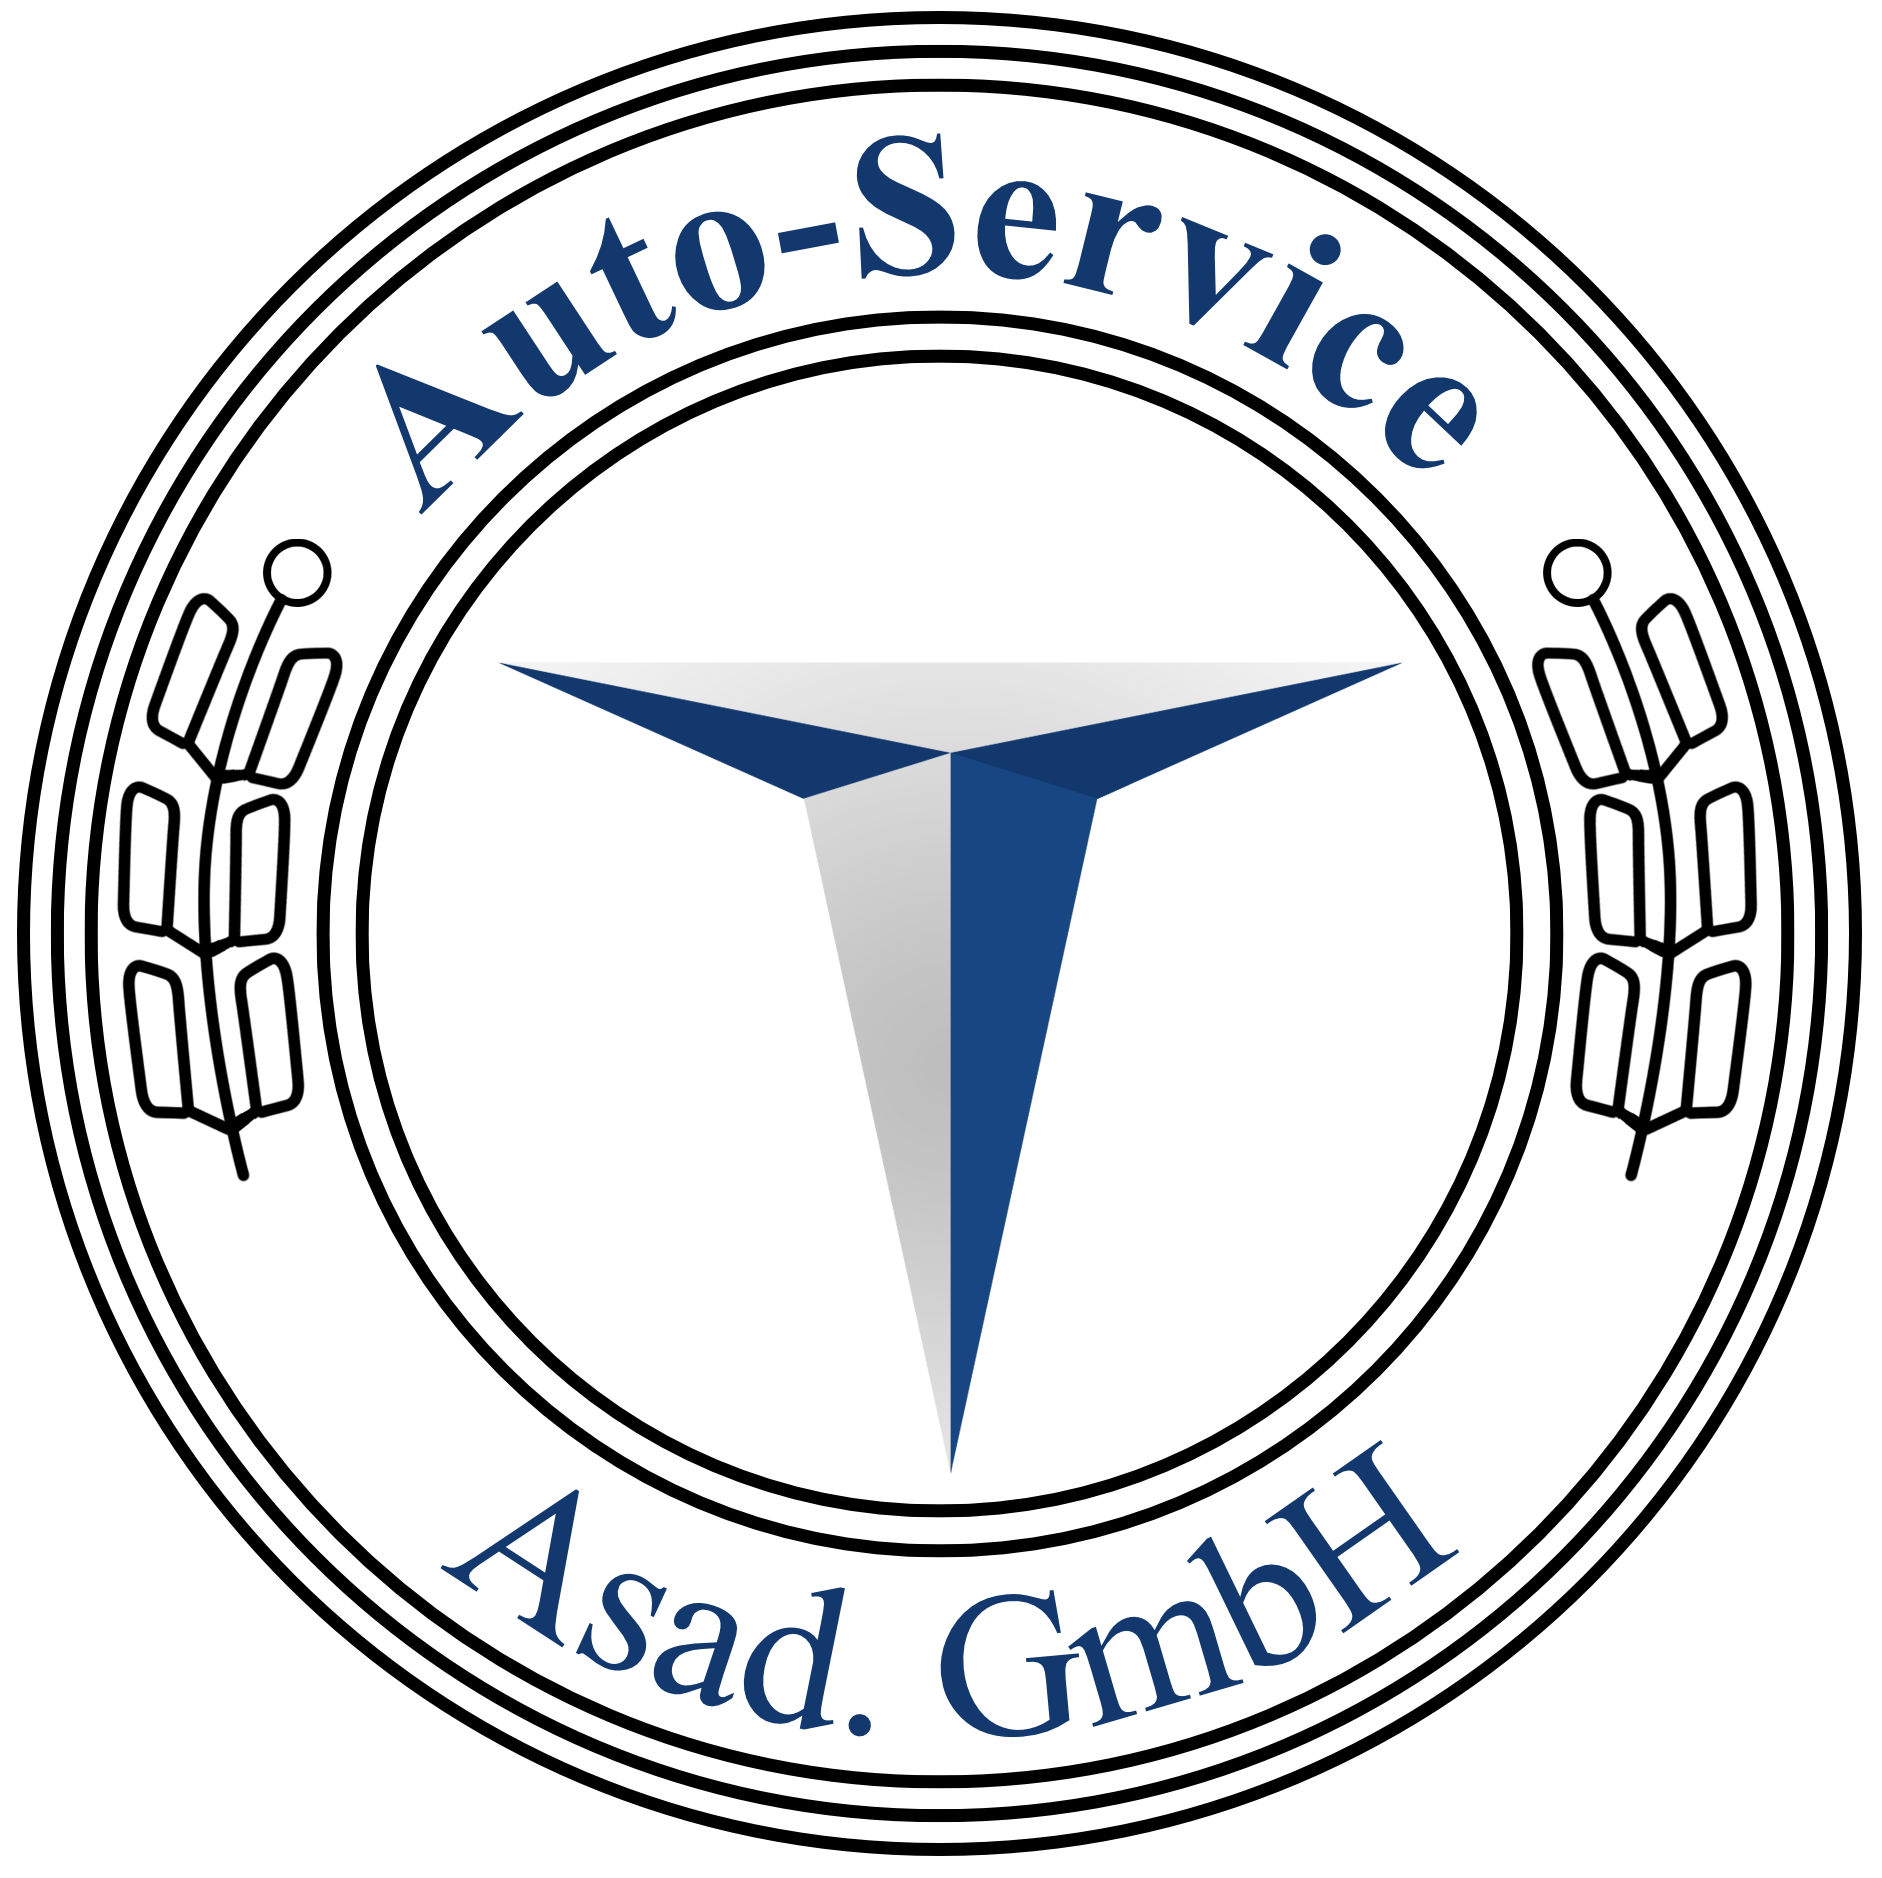 Auto Service G. Asad GmbH seit 1978